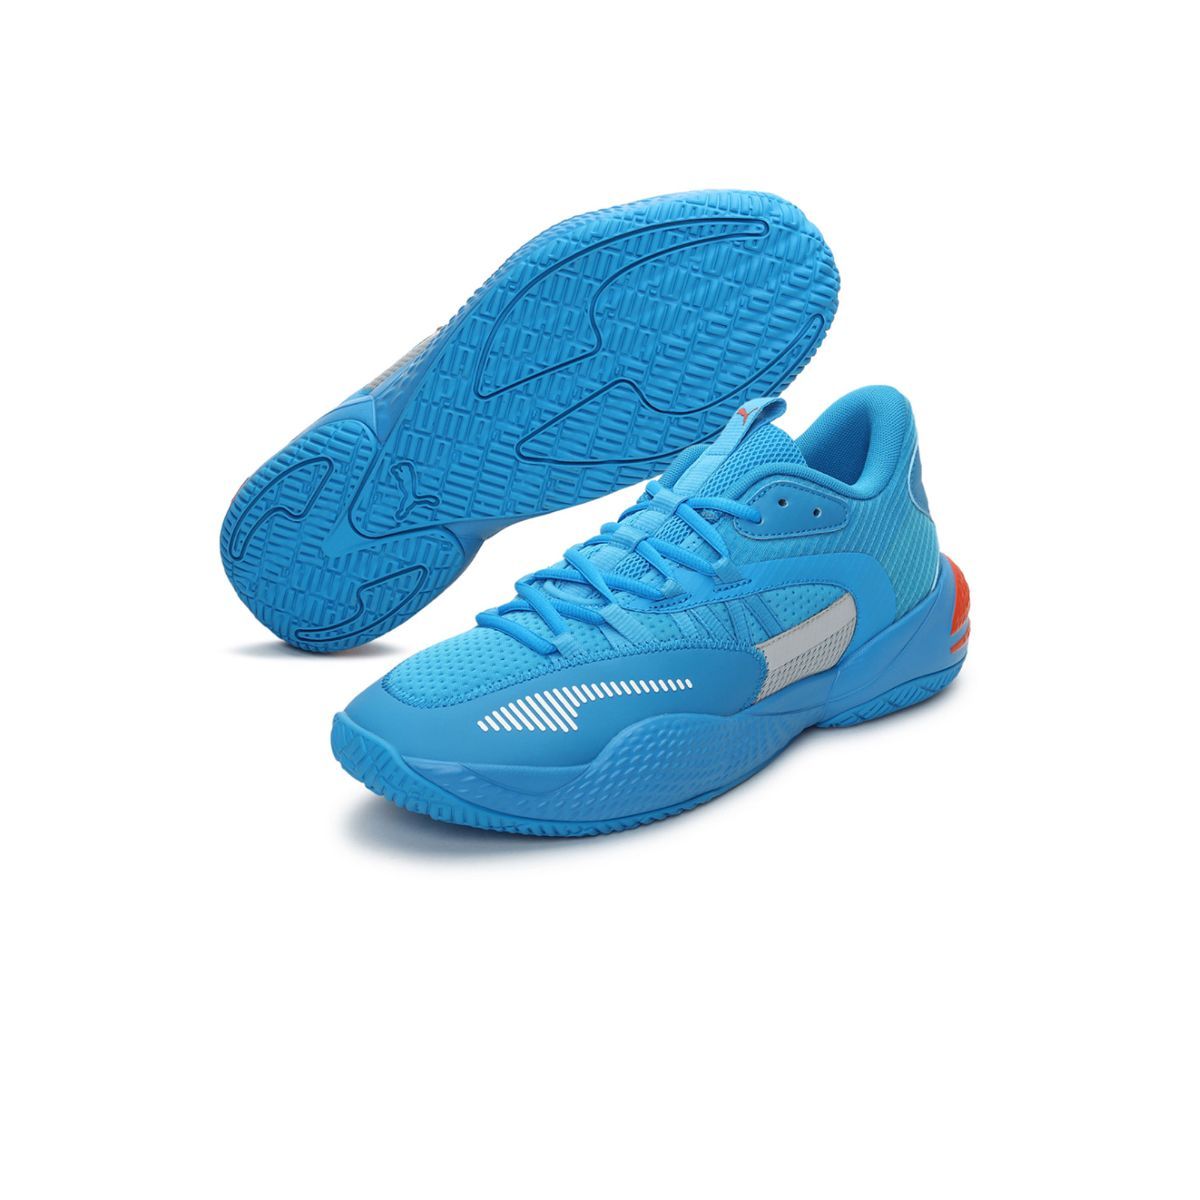 Puma Court Rider 2 0 Blue Basketball Shoes (UK 7): Buy Puma Court Rider